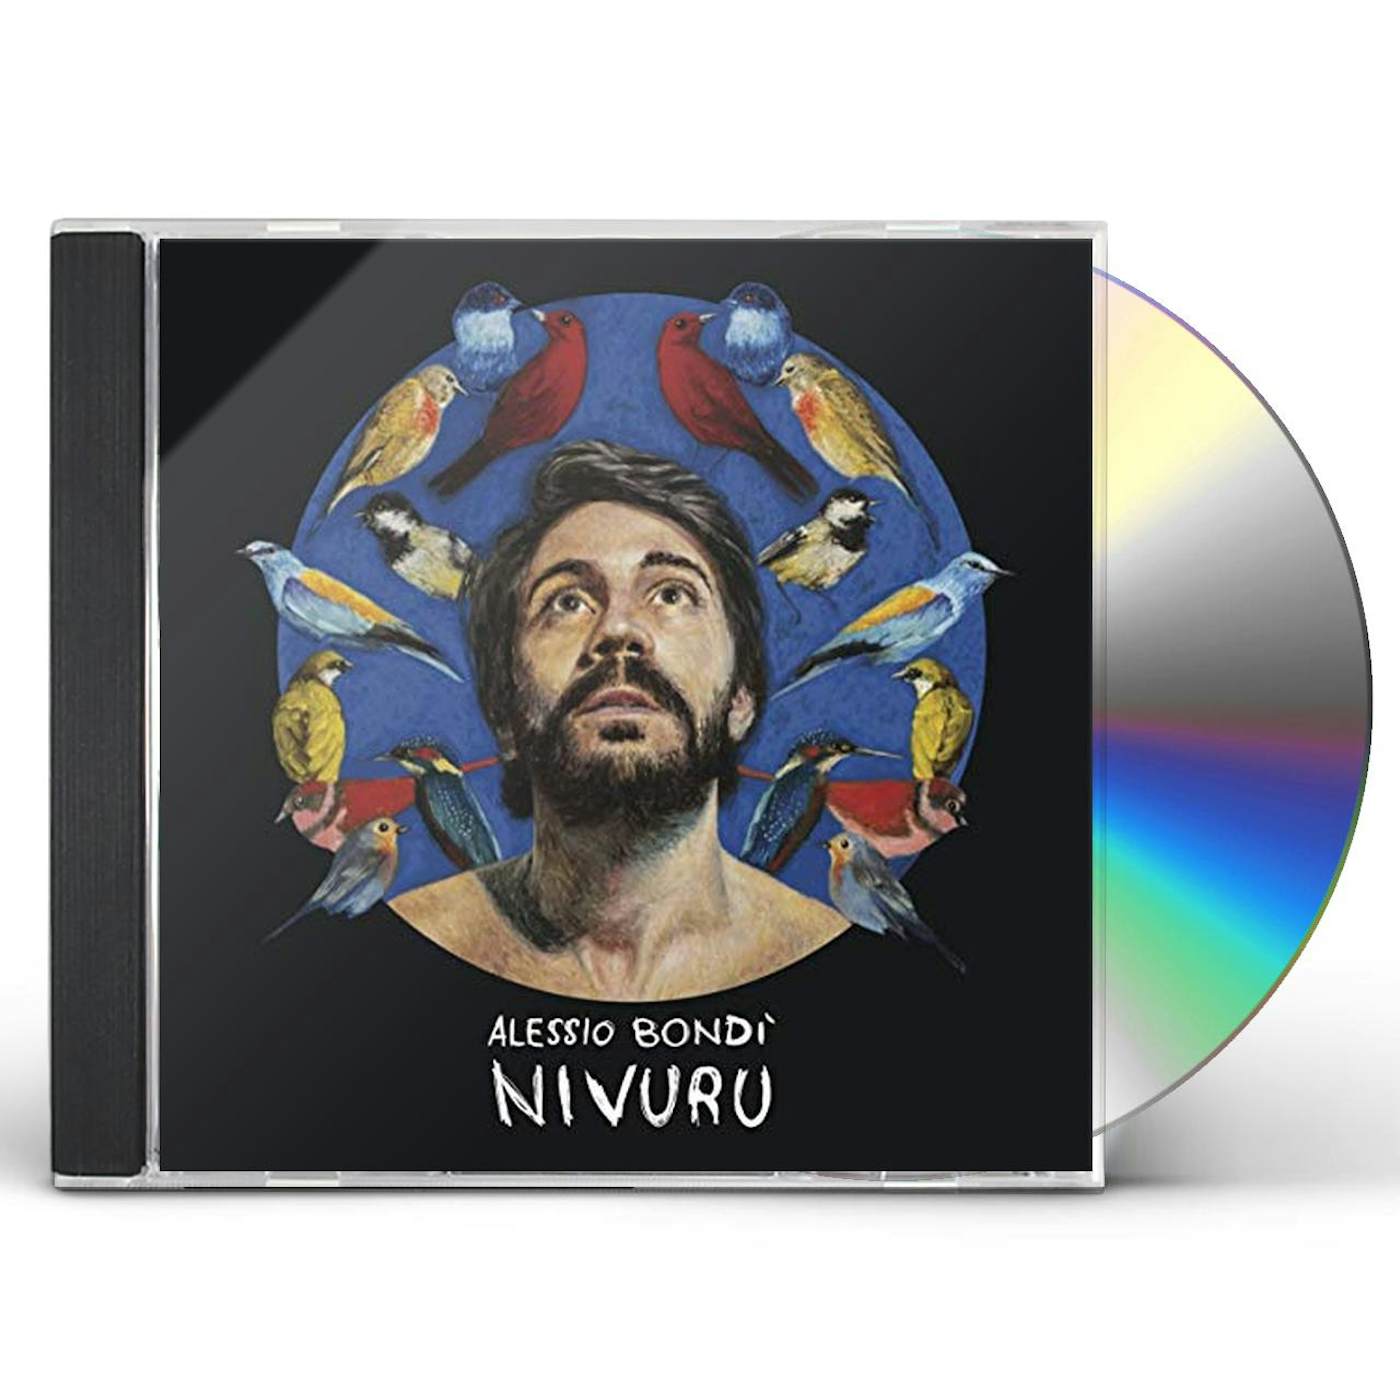 Alessio Bondì NIVURU CD